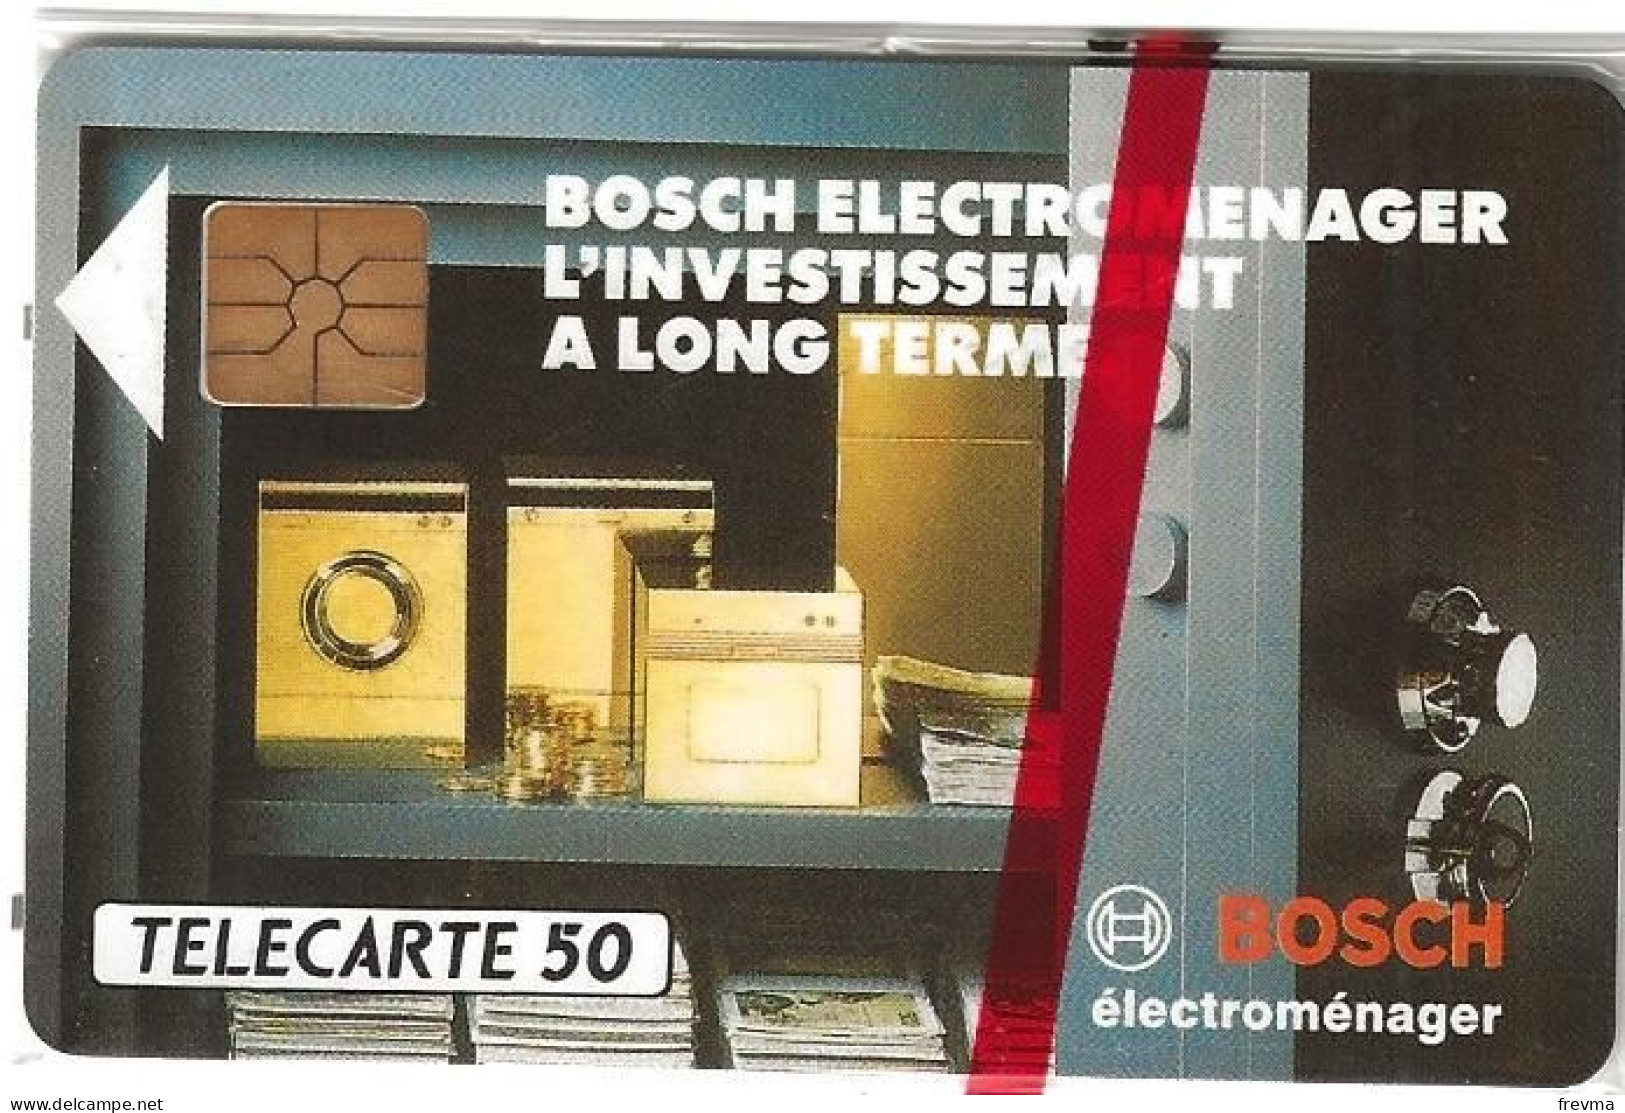 Telecarte E330 Bosch Electromenager 50 Unités NSB GEM - Privat